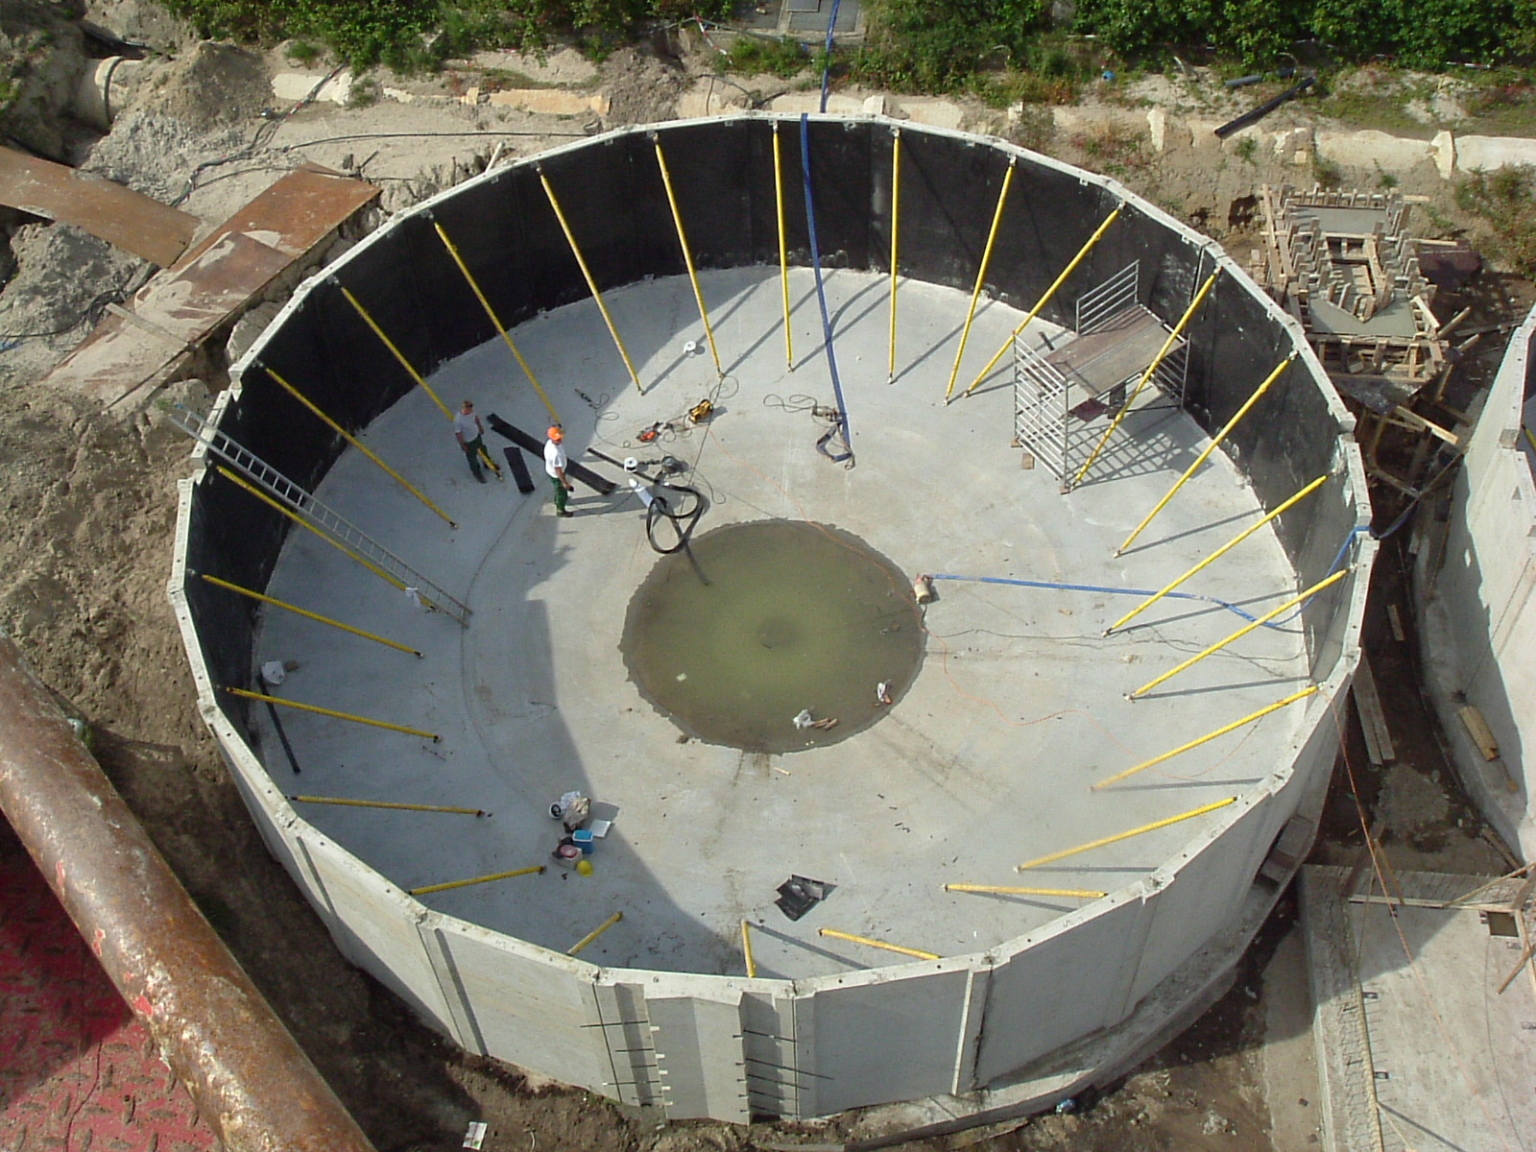 betonbescherming silo vanaf boven